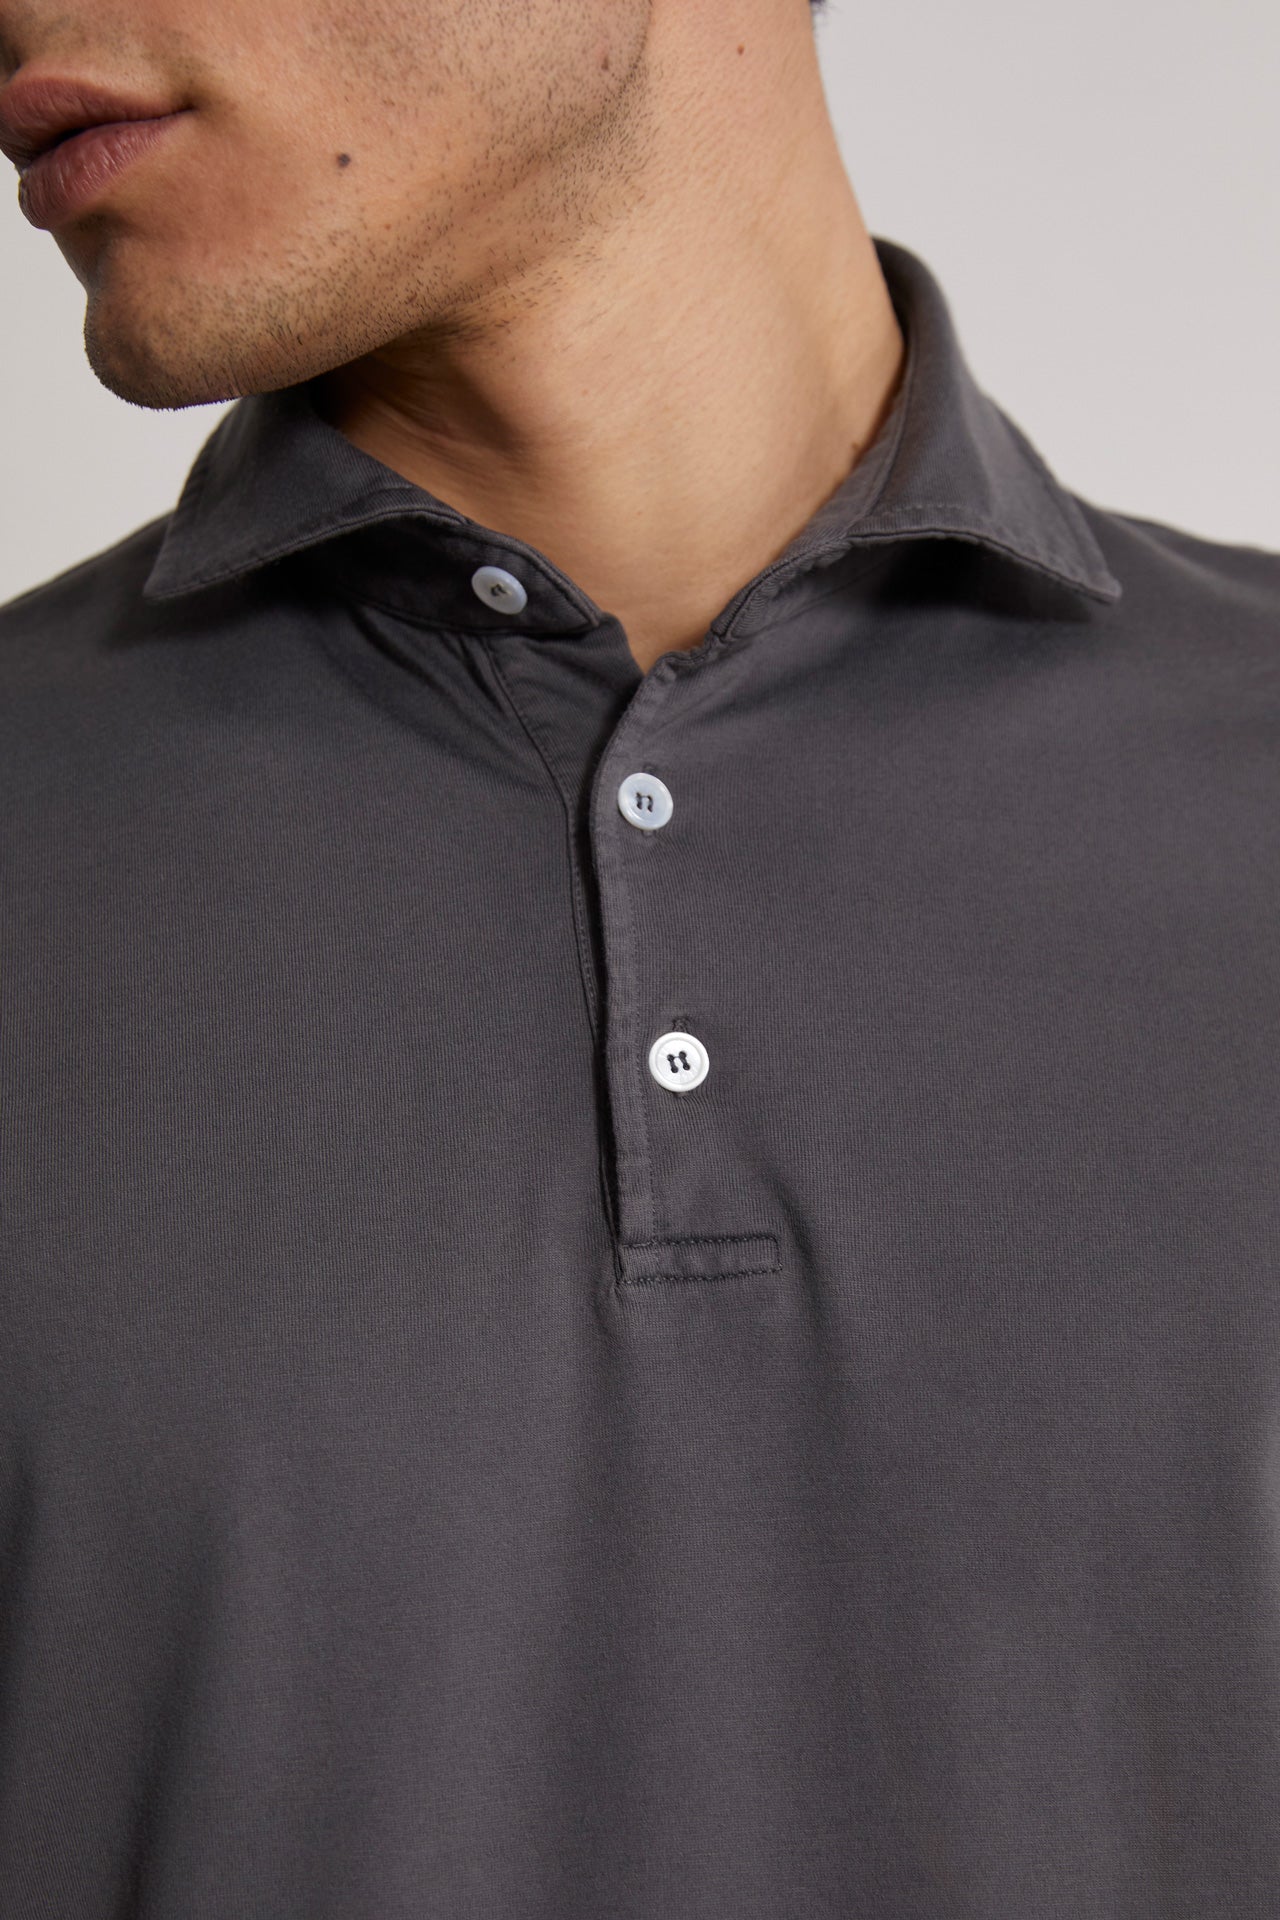 short sleeves polo t-shirt dark grey - collar detail 